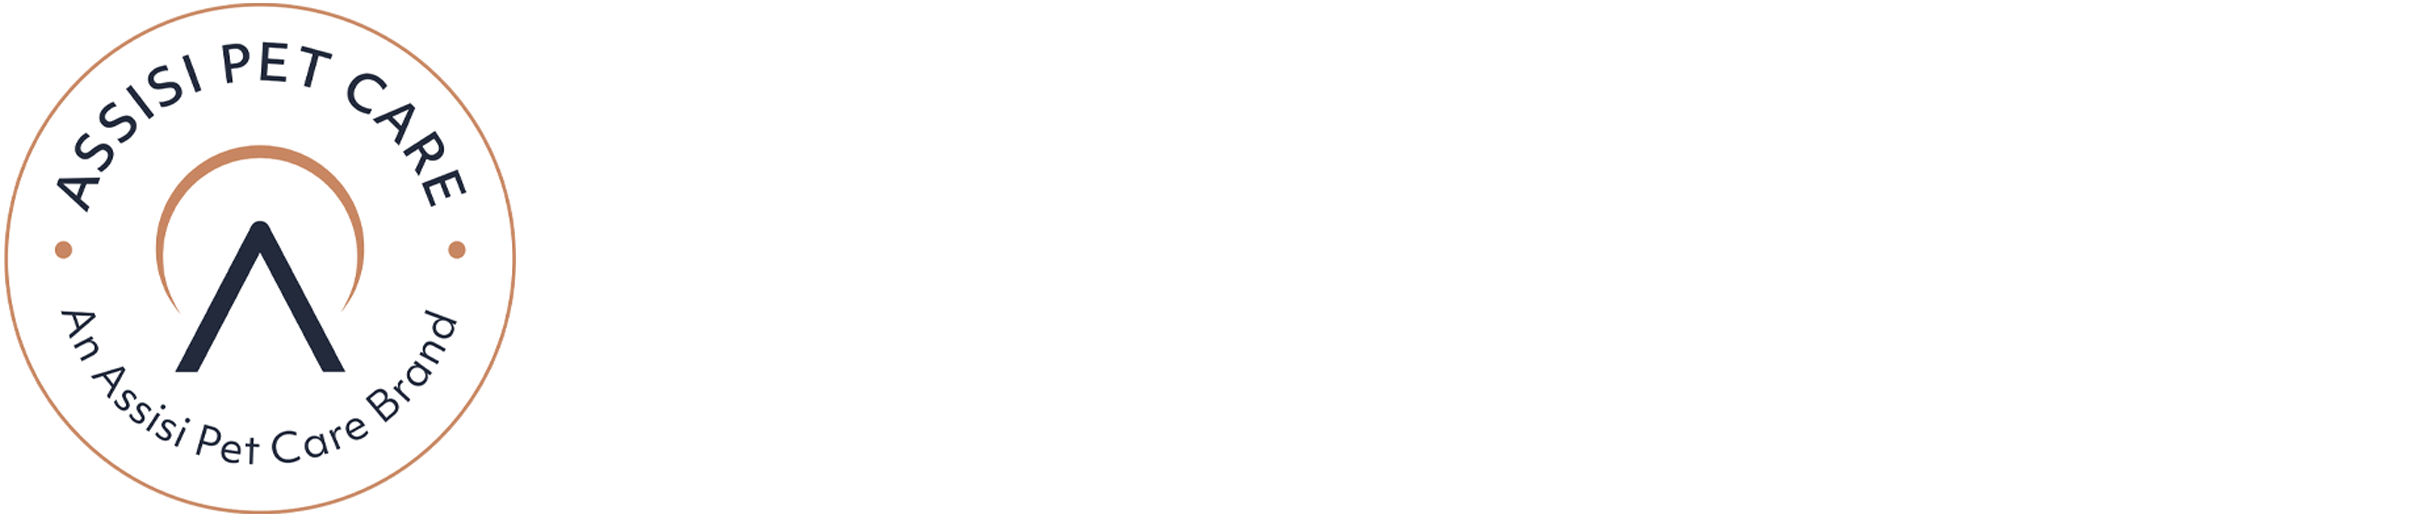 Pet Munchies Chicken Training Dog Treats 150g